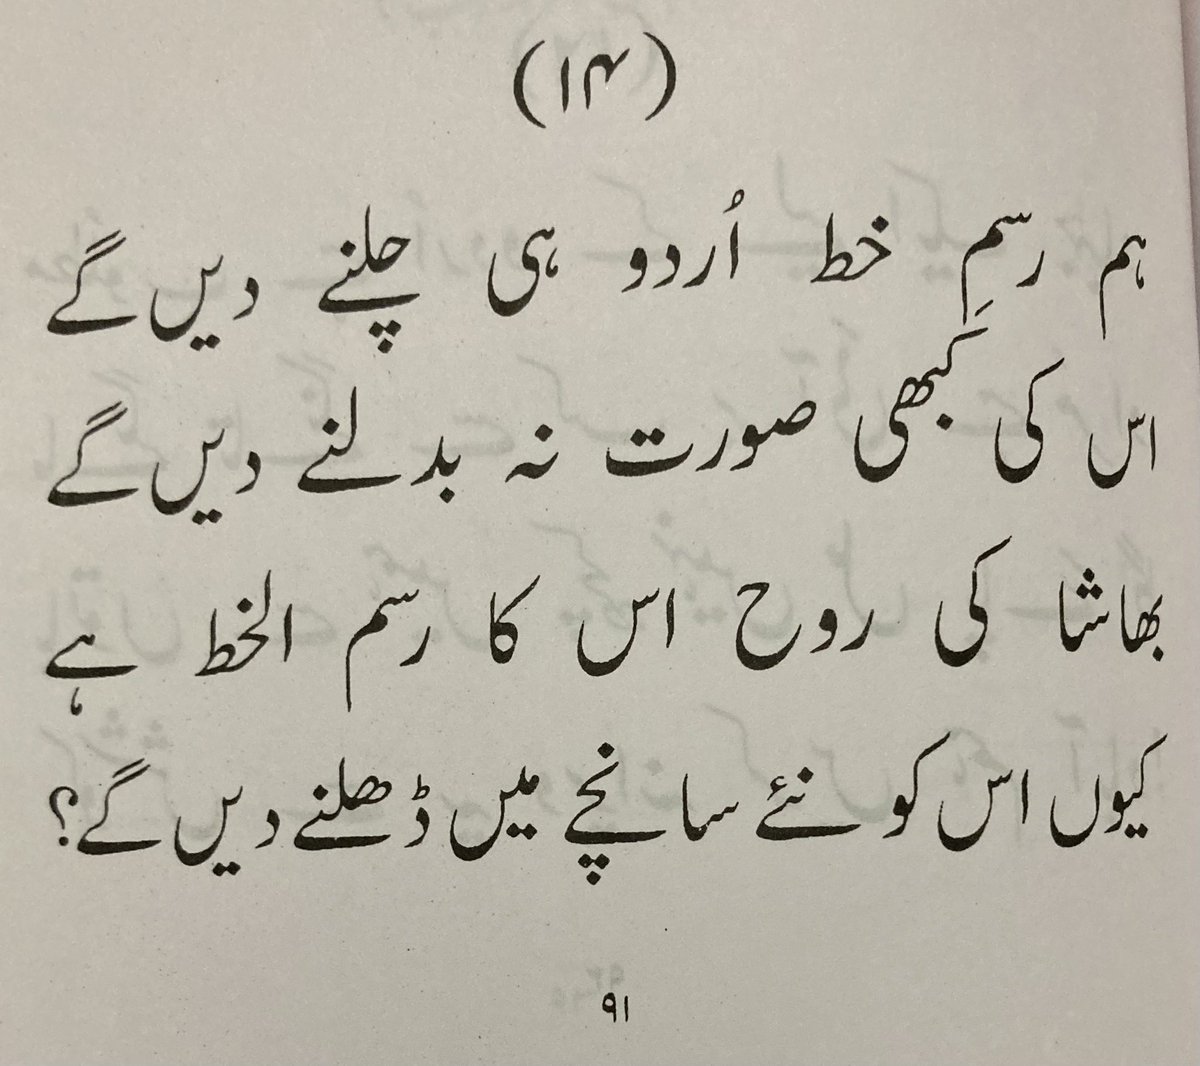 Amir Chand Bahar’s poem on how Urdu script is the soul of Urdu.

#Urdu #Urduscript